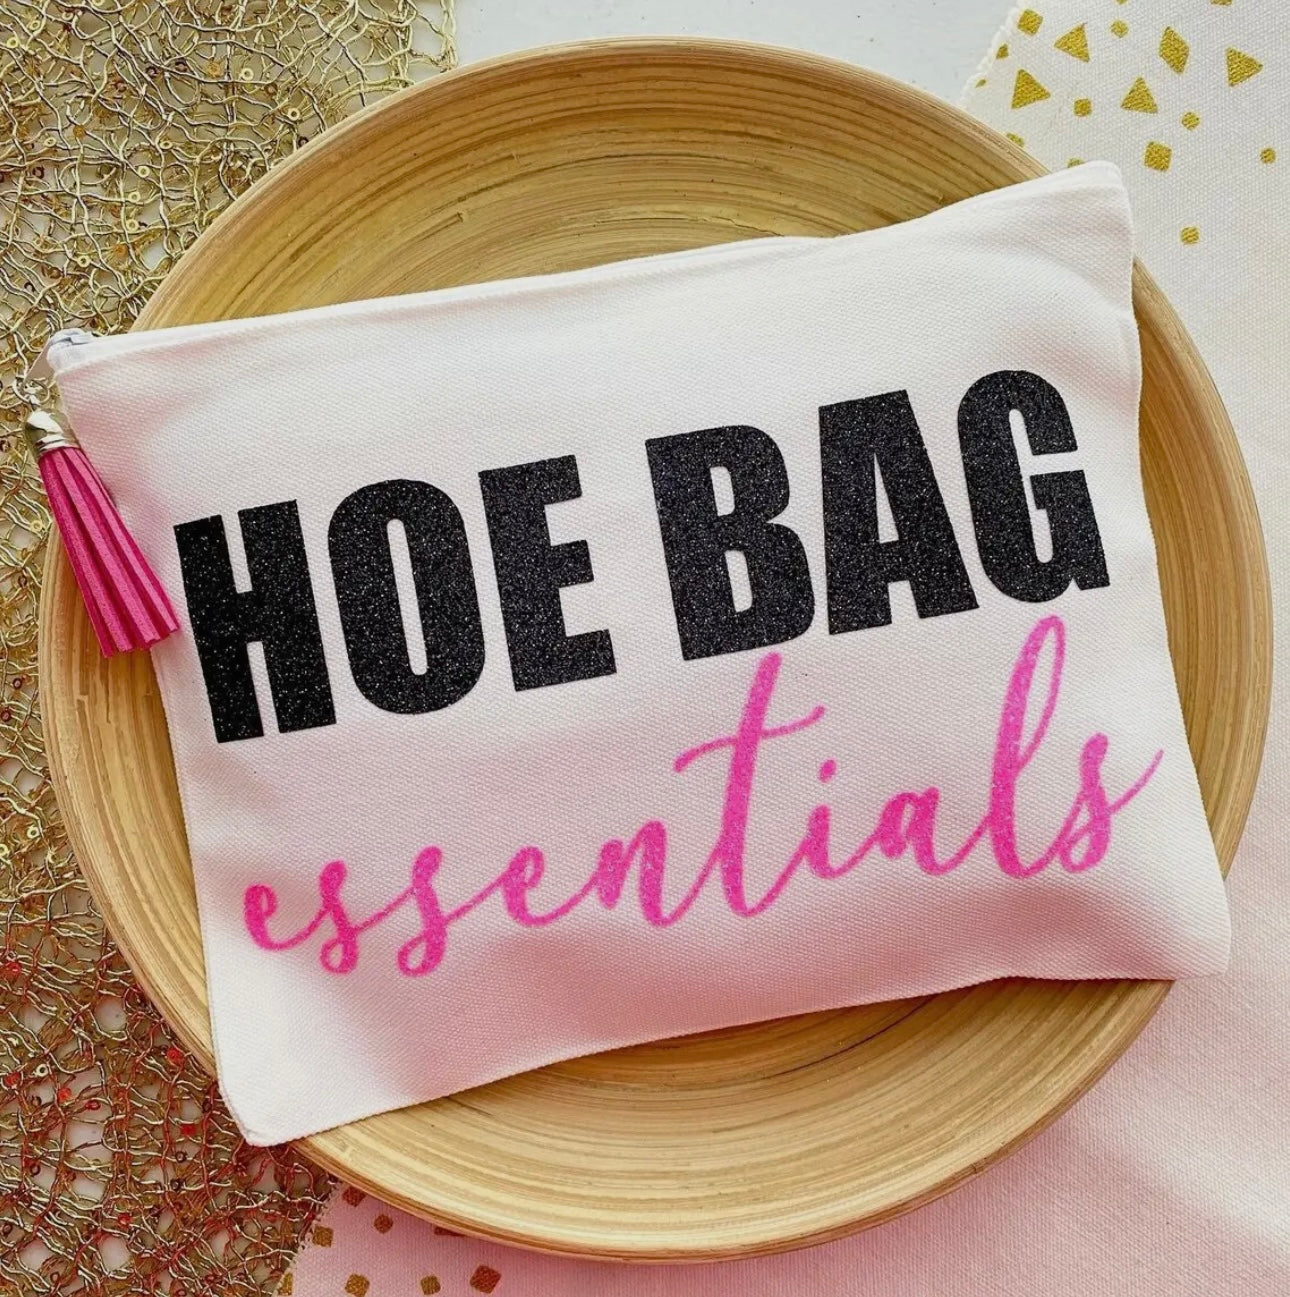 Hoe bag essentials